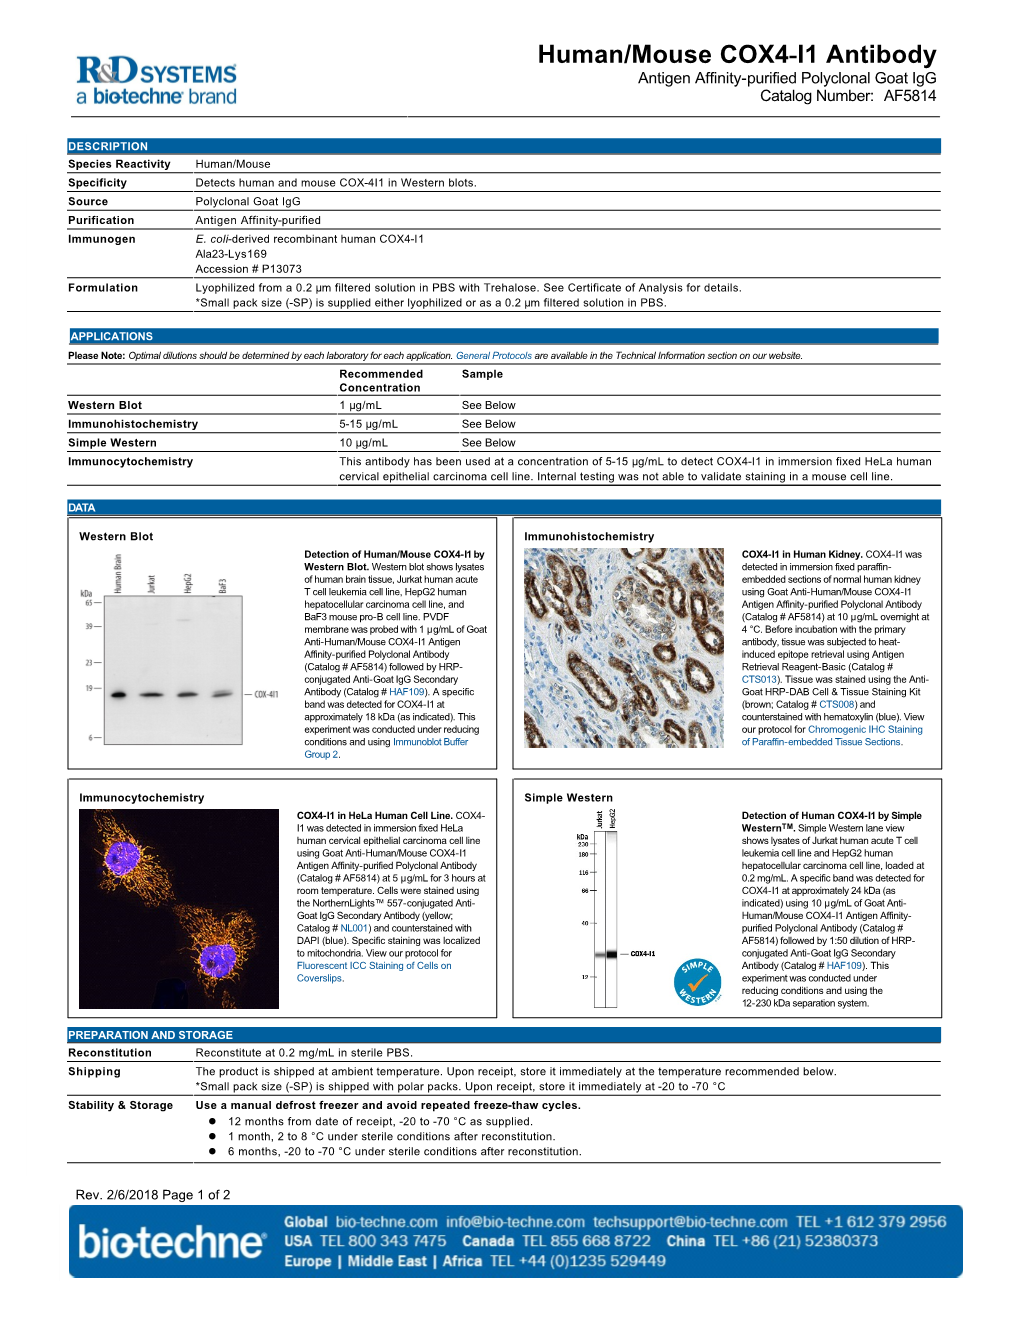 Human/Mouse COX4-I1 Antibody Antigen Affinity-Purified Polyclonal Goat Igg Catalog Number: AF5814